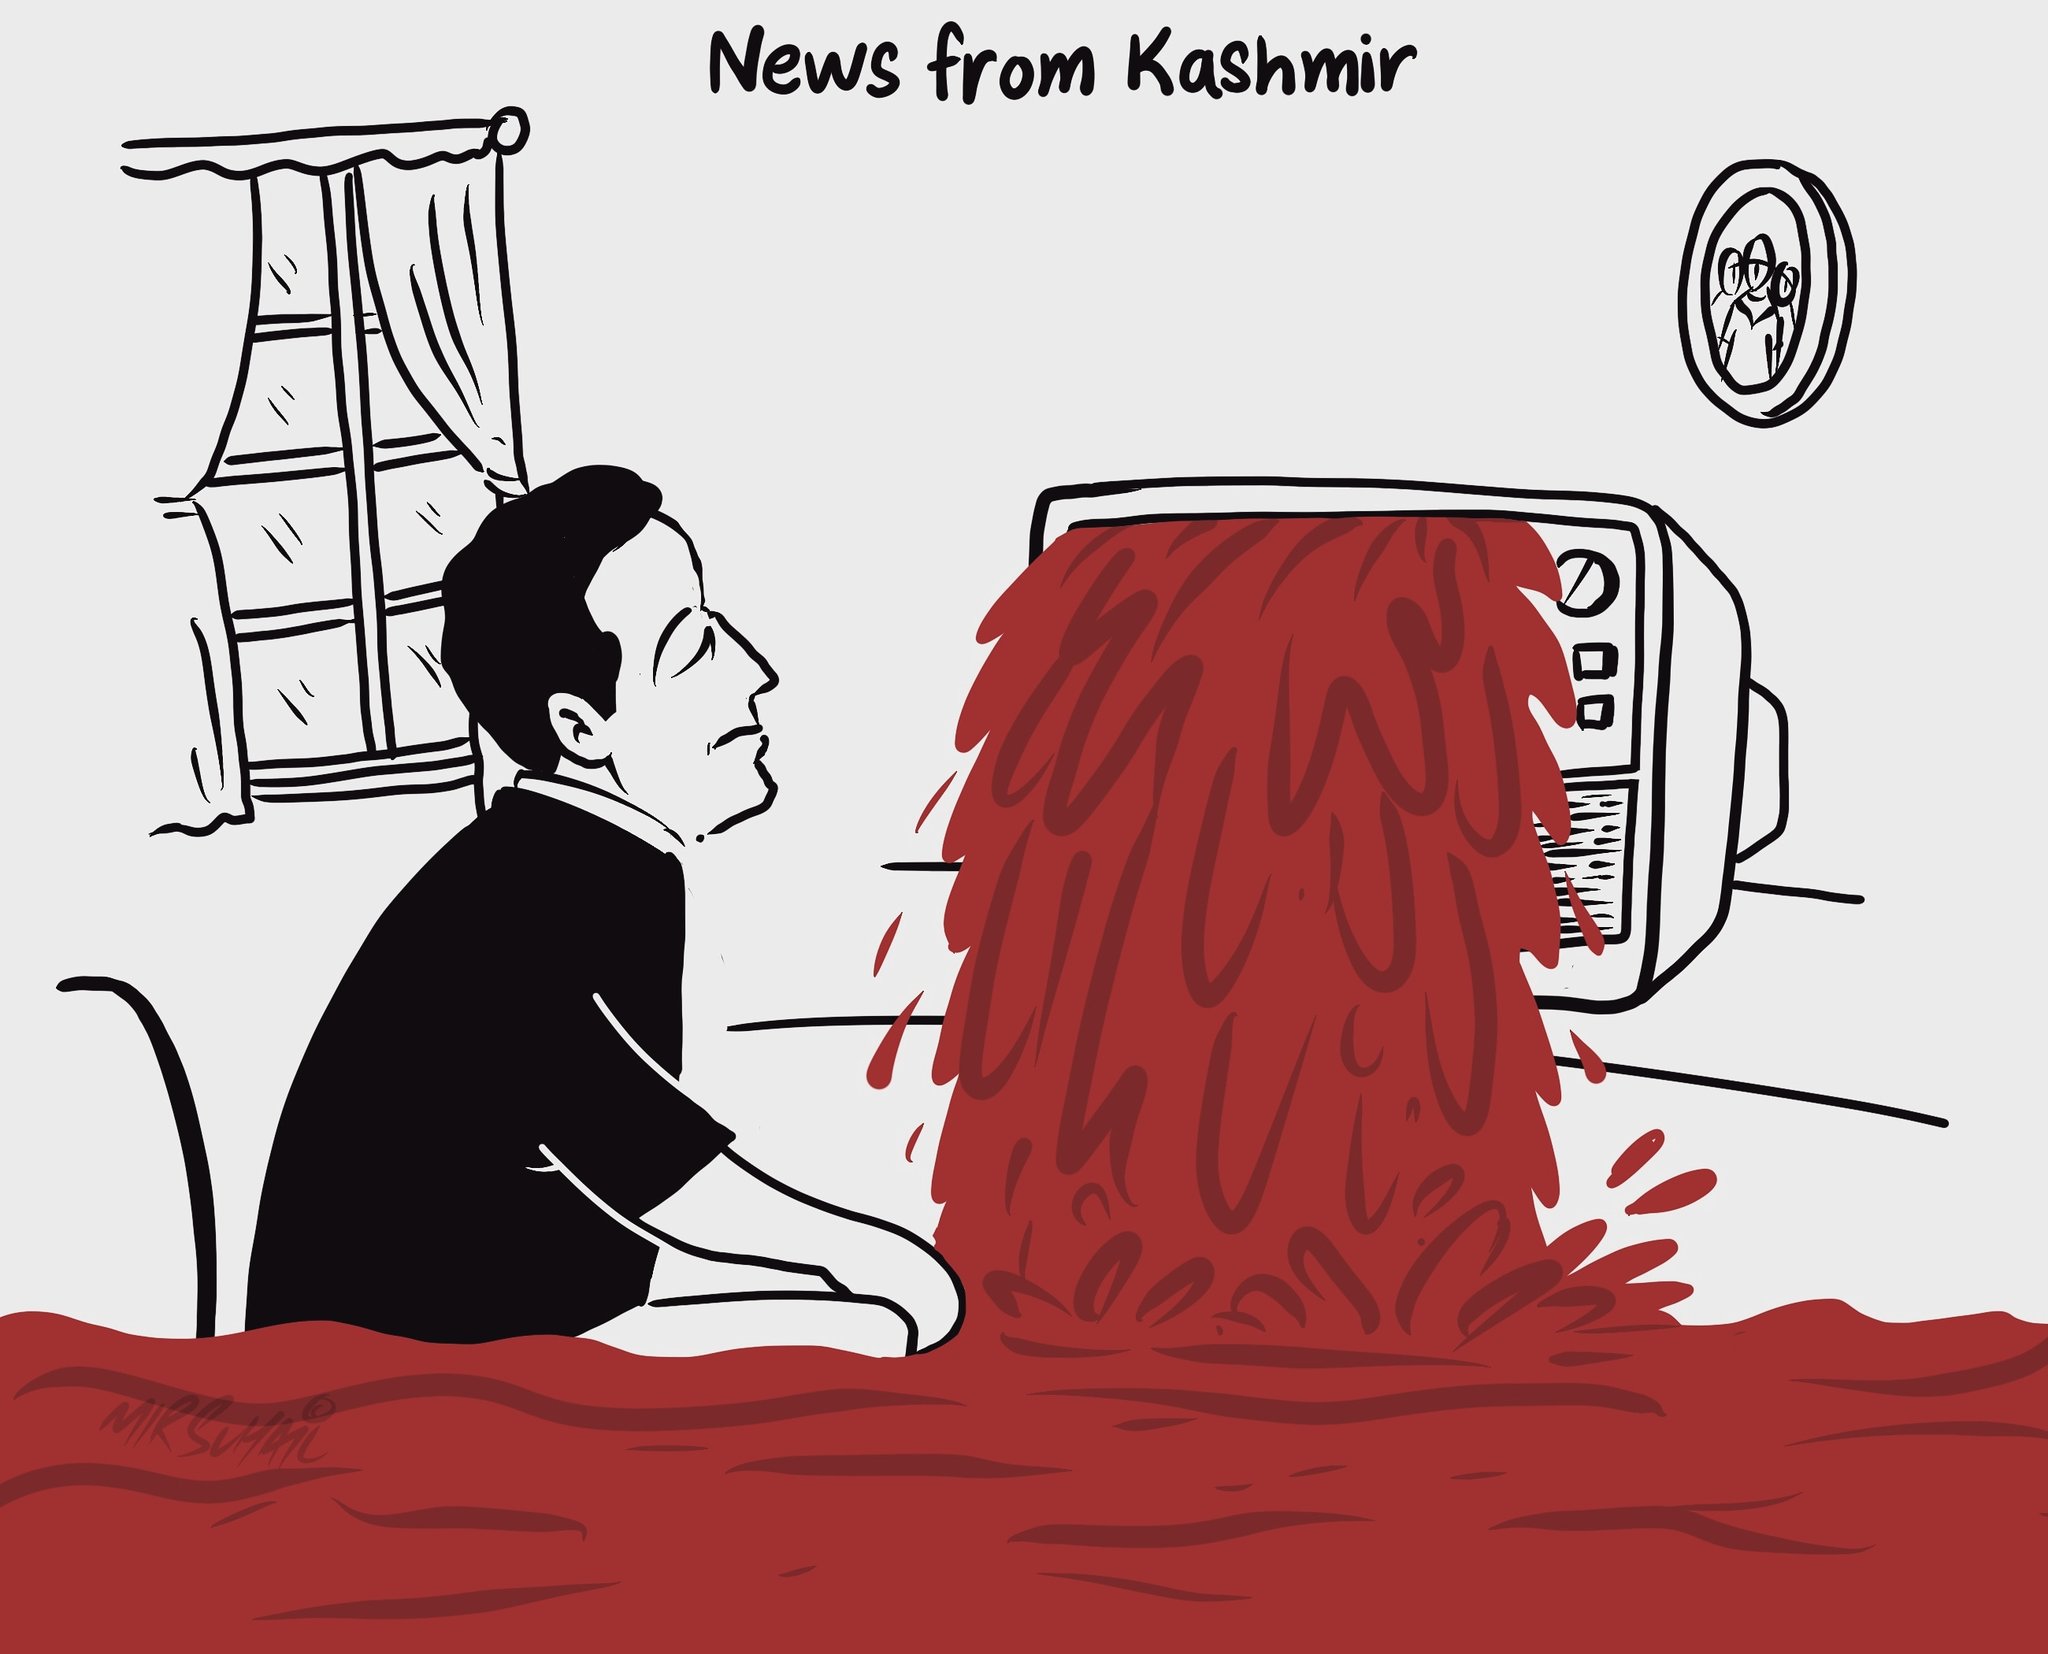 Meet Kashmiri cartoonist taking a dig at Indian rule | Arts and Culture |  Al Jazeera